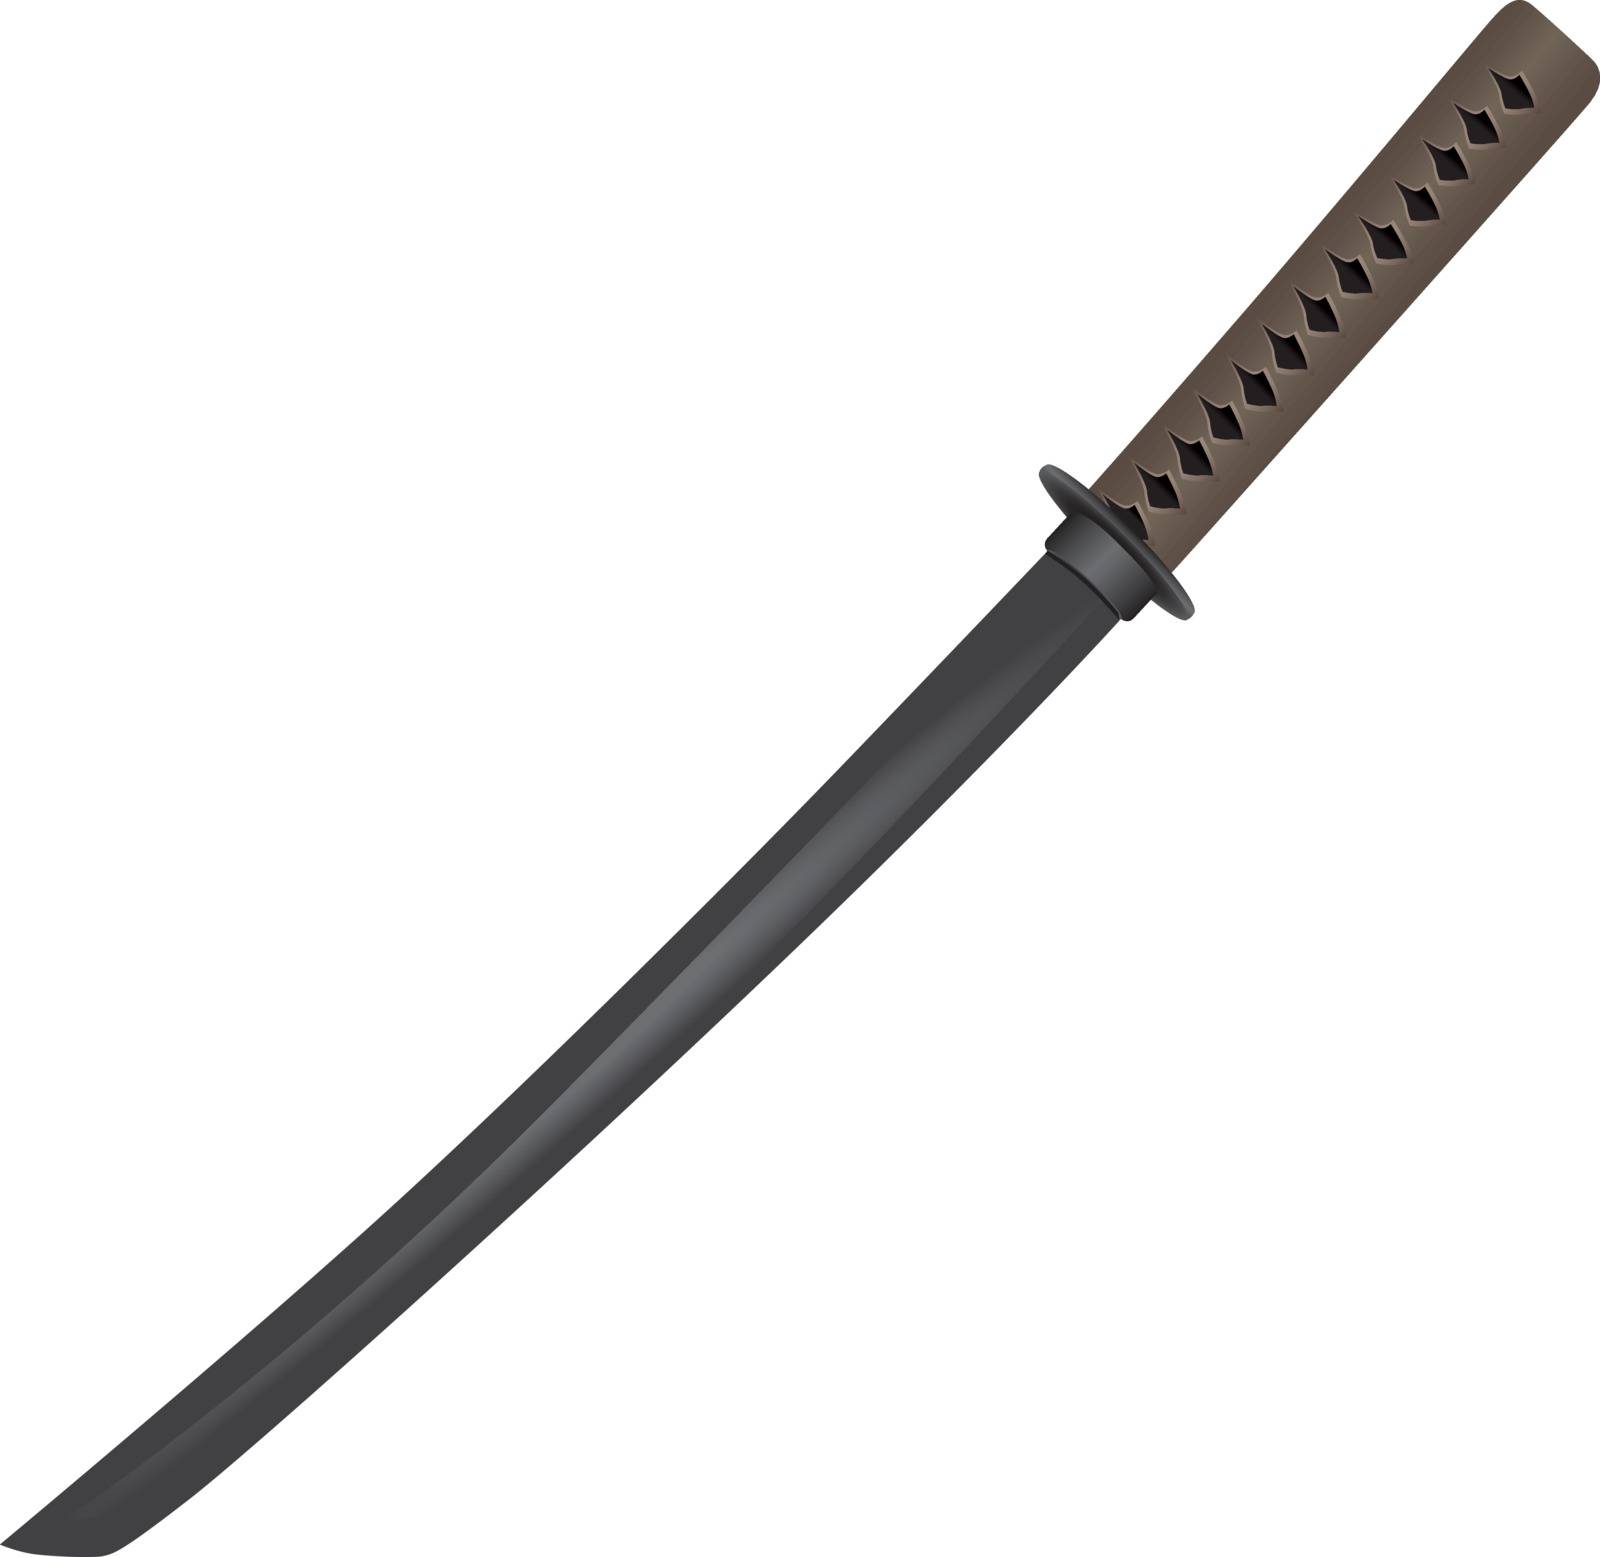 Wooden traditional sword for training. Vector illustration.